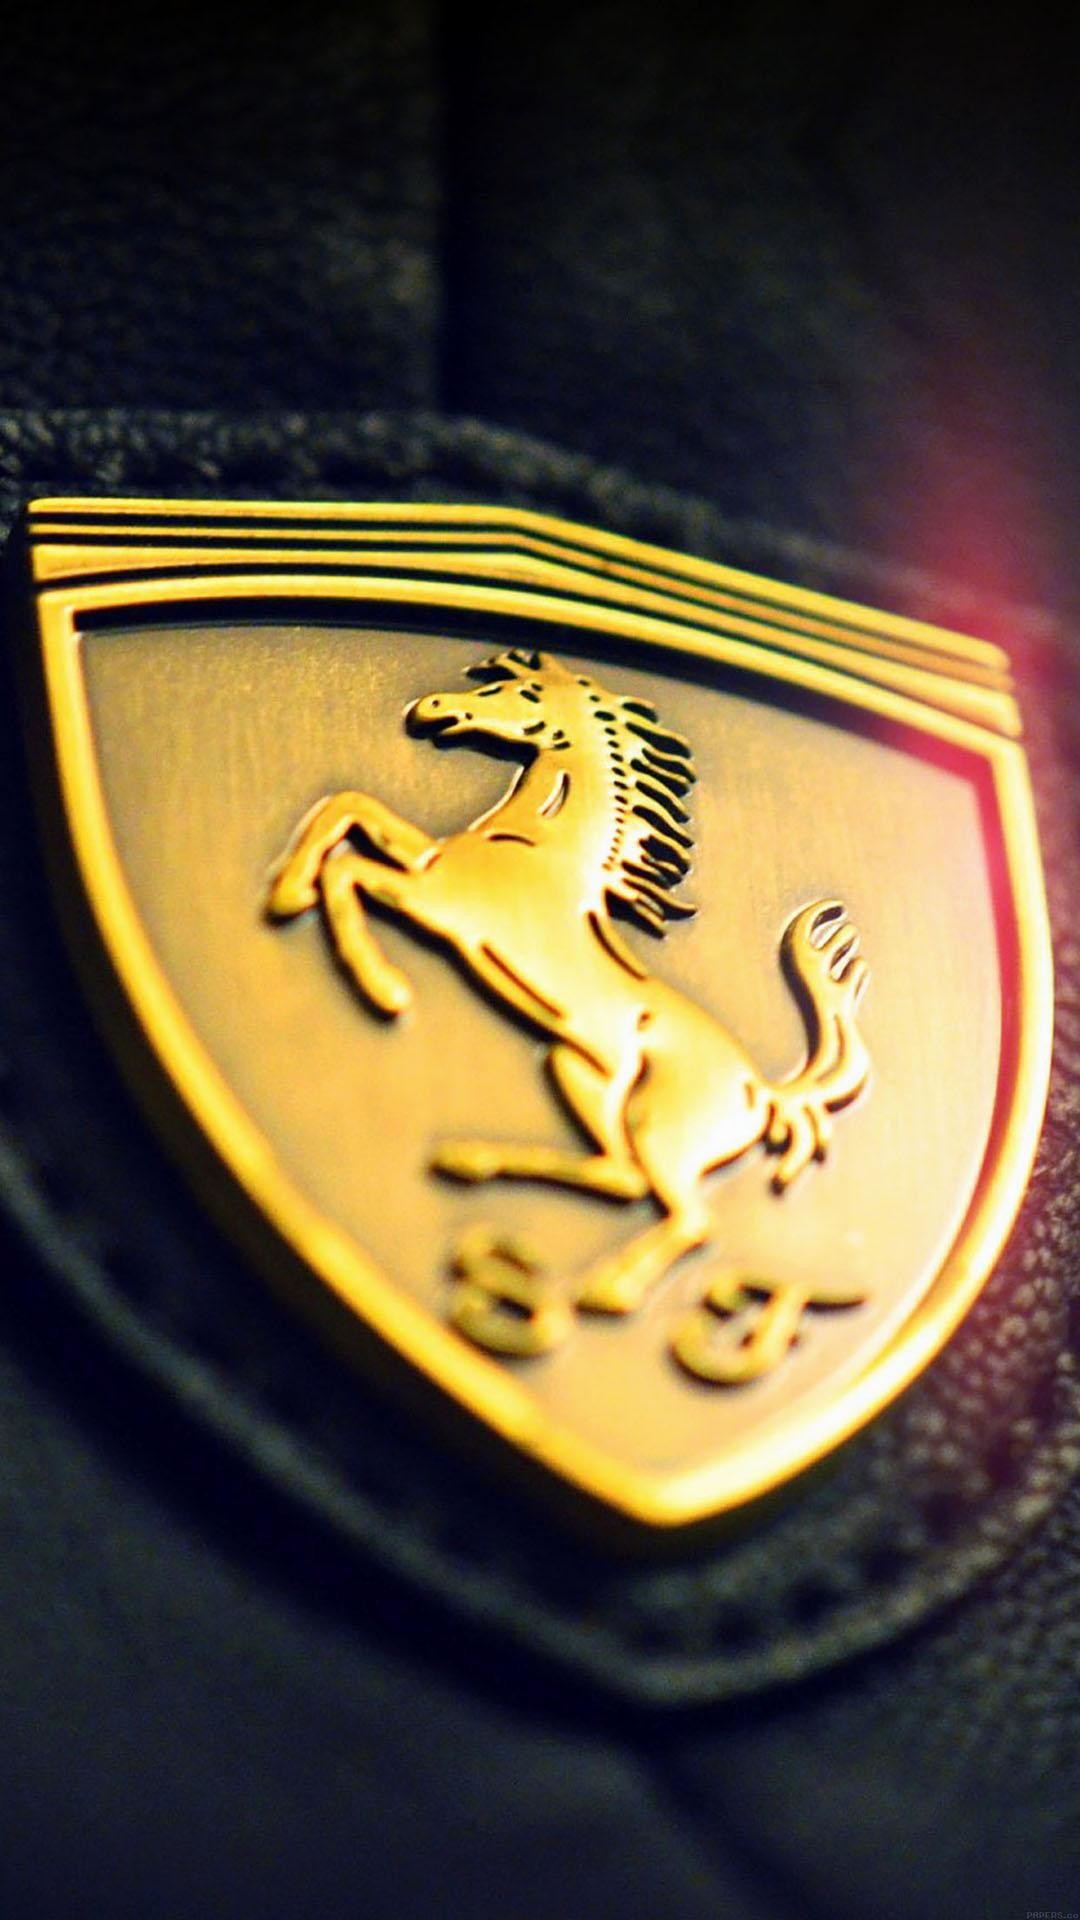 wallpaper.wiki-Ferrari-iPhone-logo-photos-PIC-WPB005133